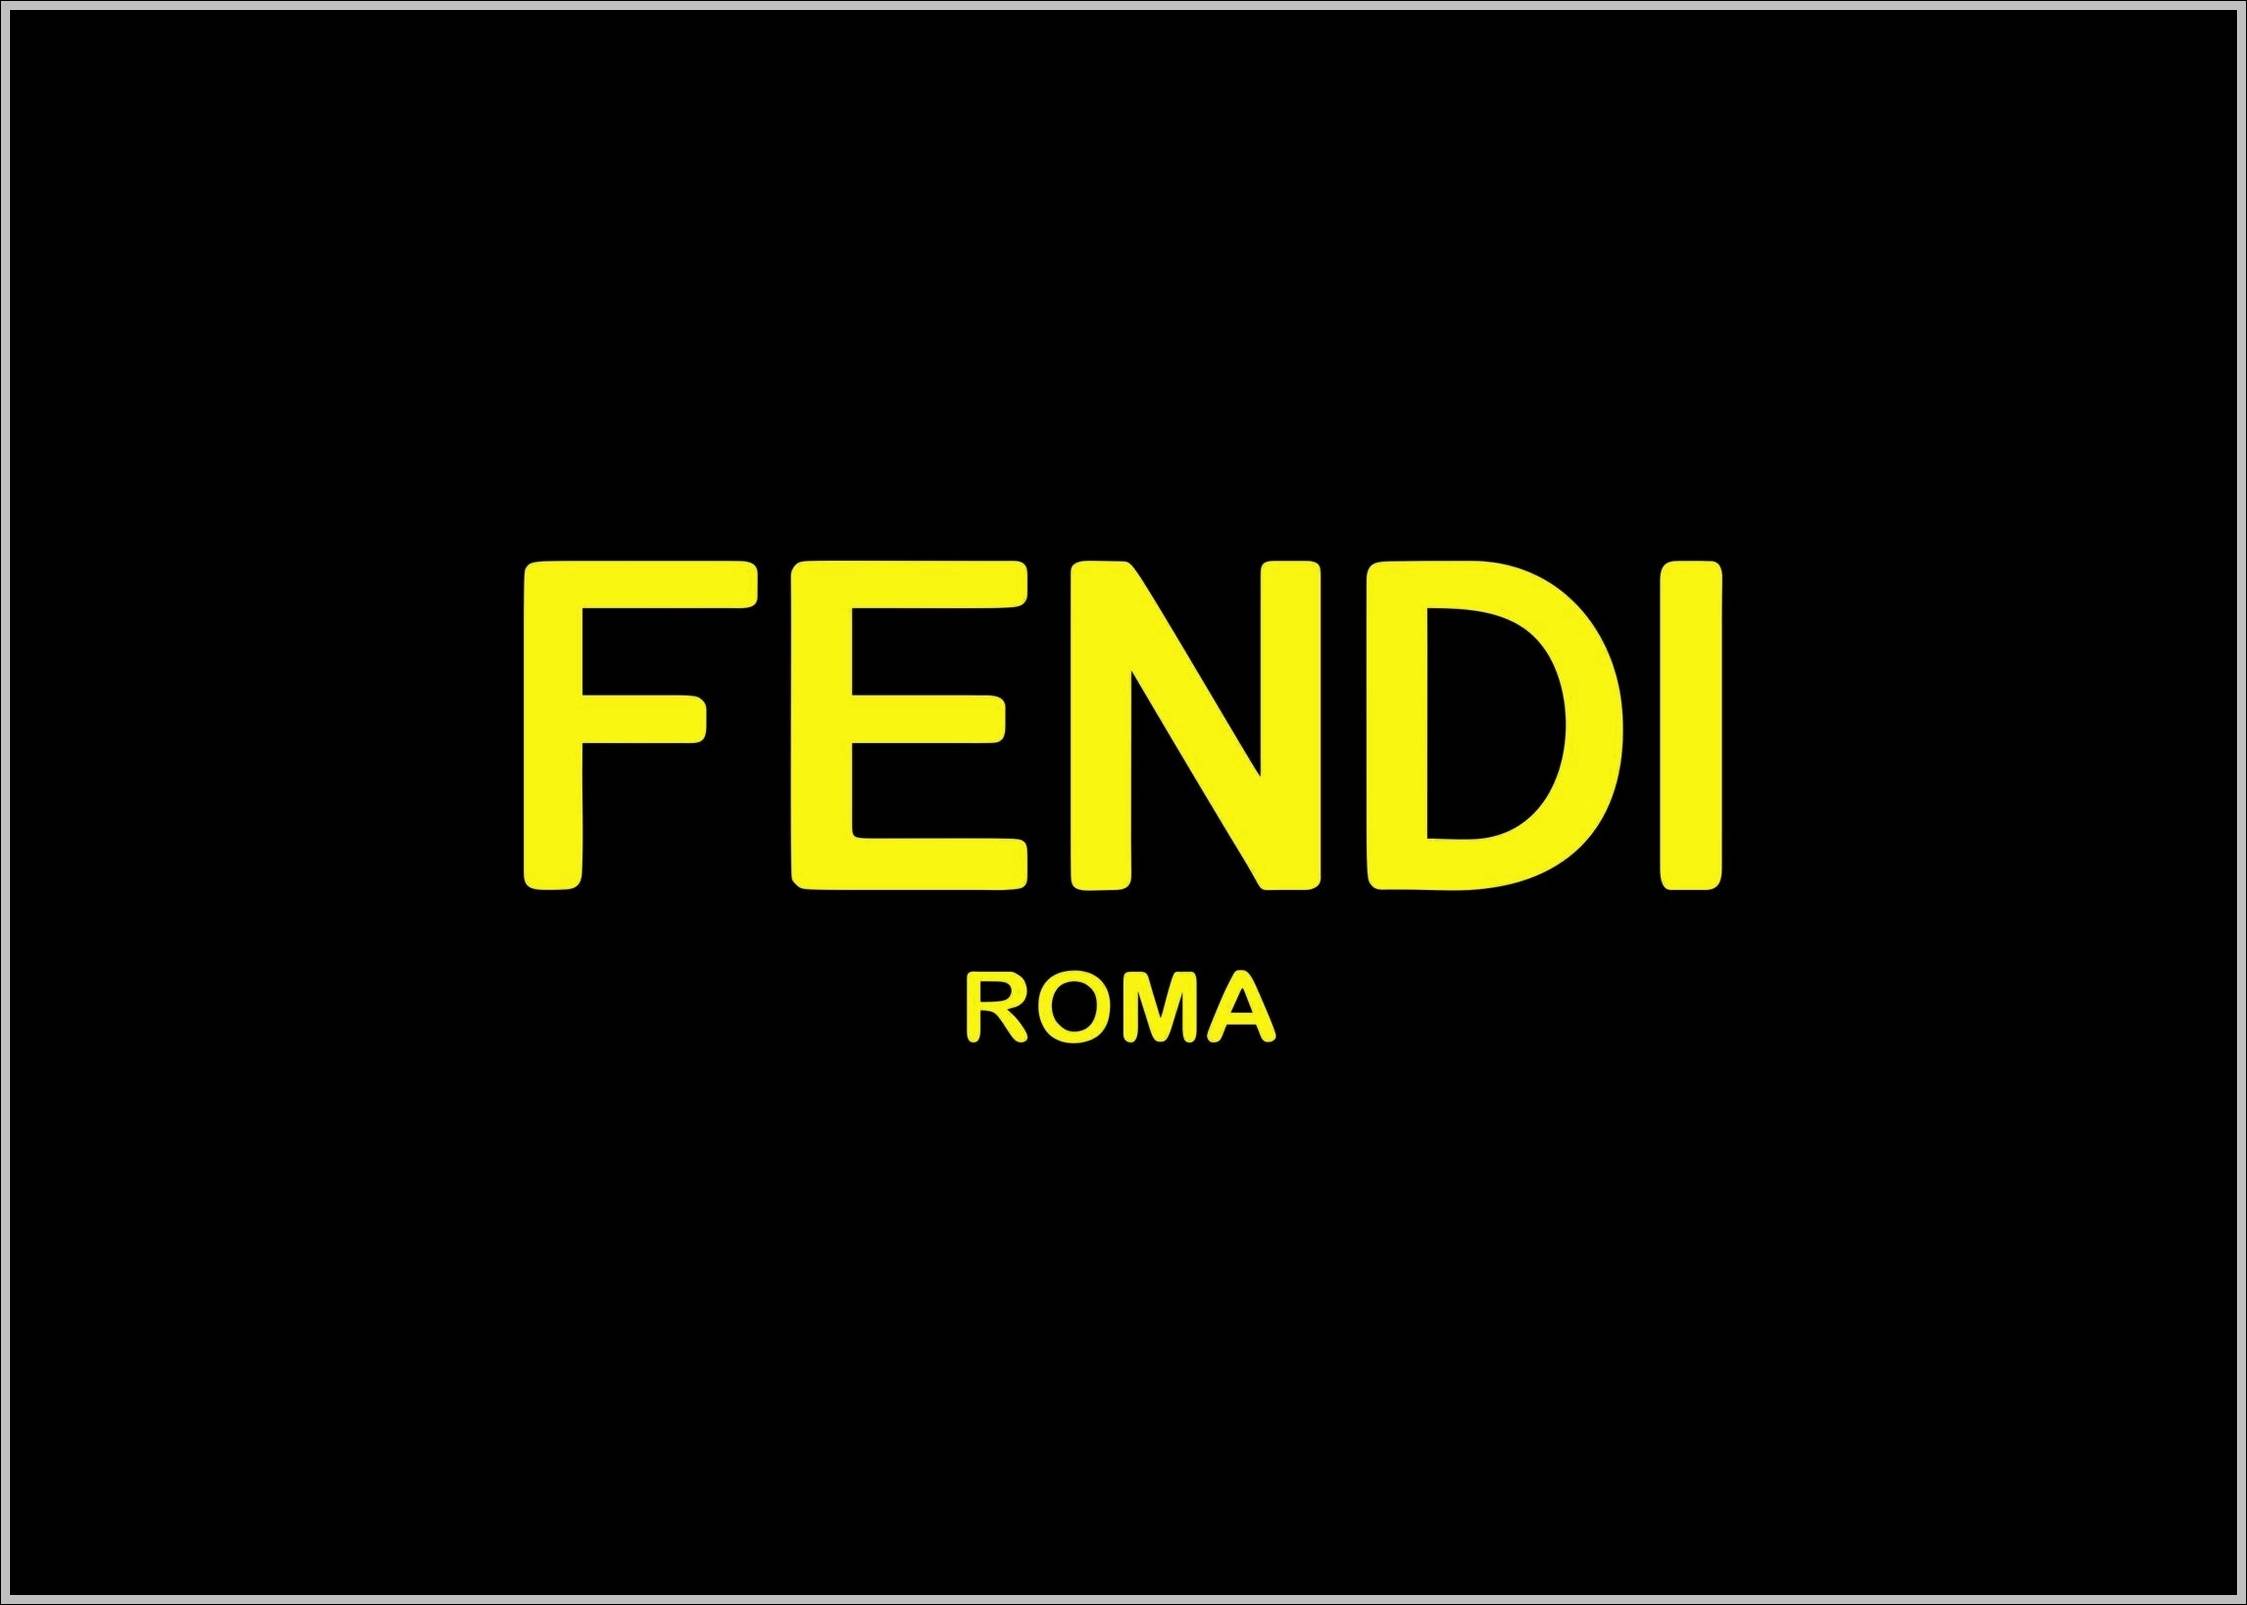 Fendi logo yellow